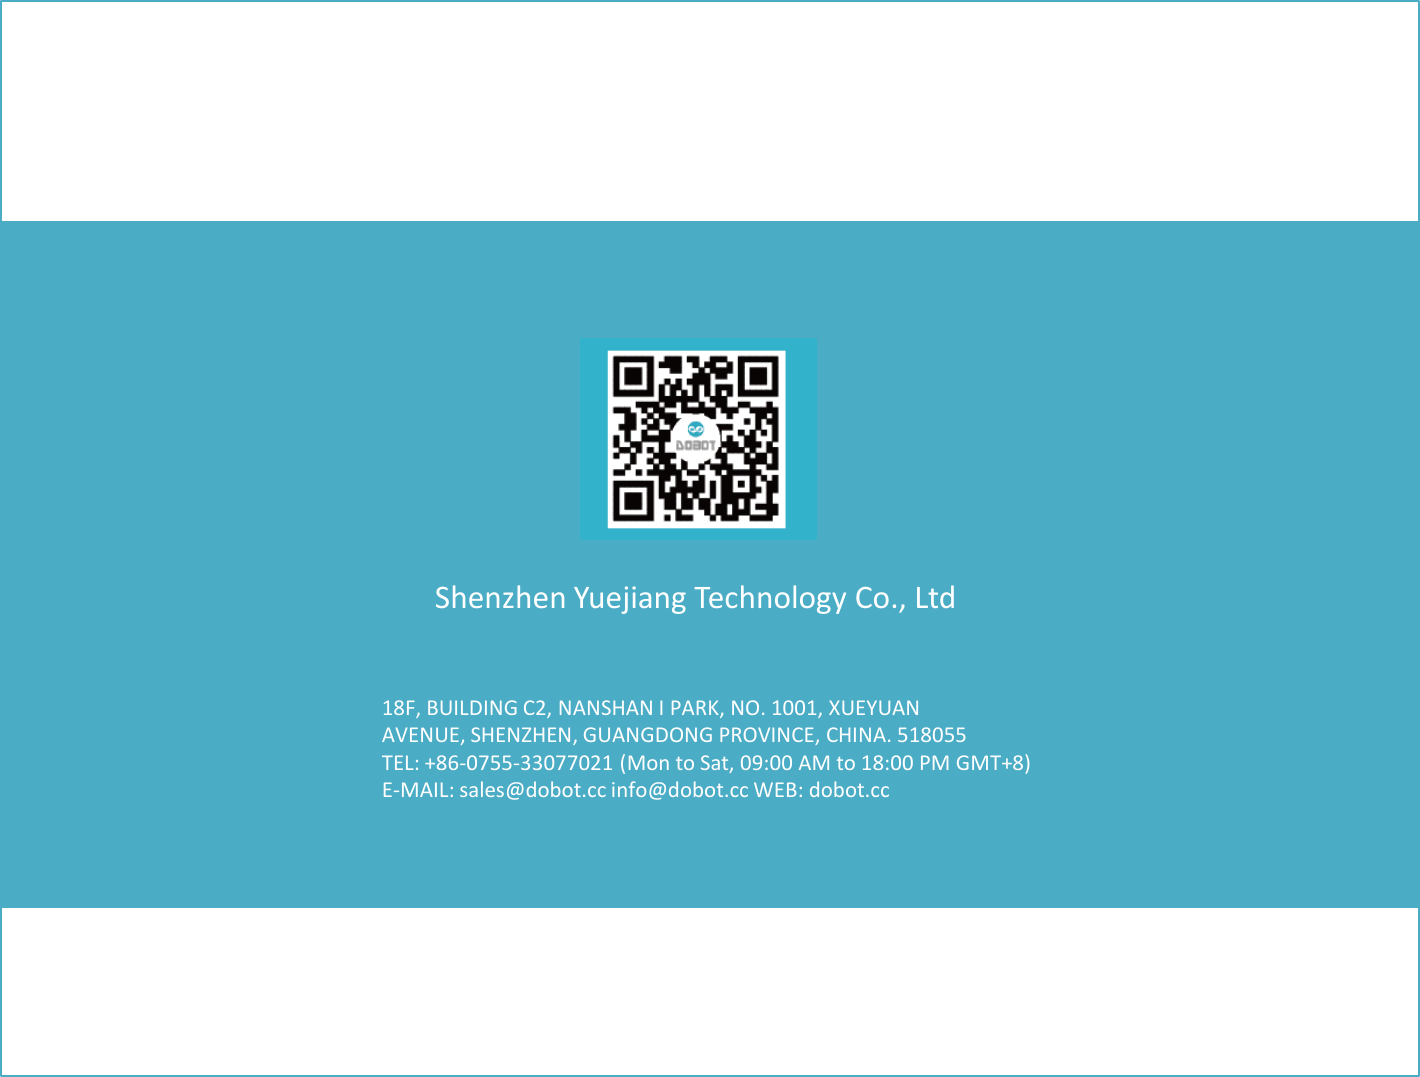 18F, BUILDING C2, NANSHAN I PARK, NO. 1001, XUEYUAN AVENUE, SHENZHEN, GUANGDONG PROVINCE, CHINA. 518055 TEL: +86-0755-33077021 (Mon to Sat, 09:00 AM to 18:00 PM GMT+8) E-MAIL: sales@dobot.cc info@dobot.cc WEB: dobot.cc Shenzhen Yuejiang Technology Co., Ltd 